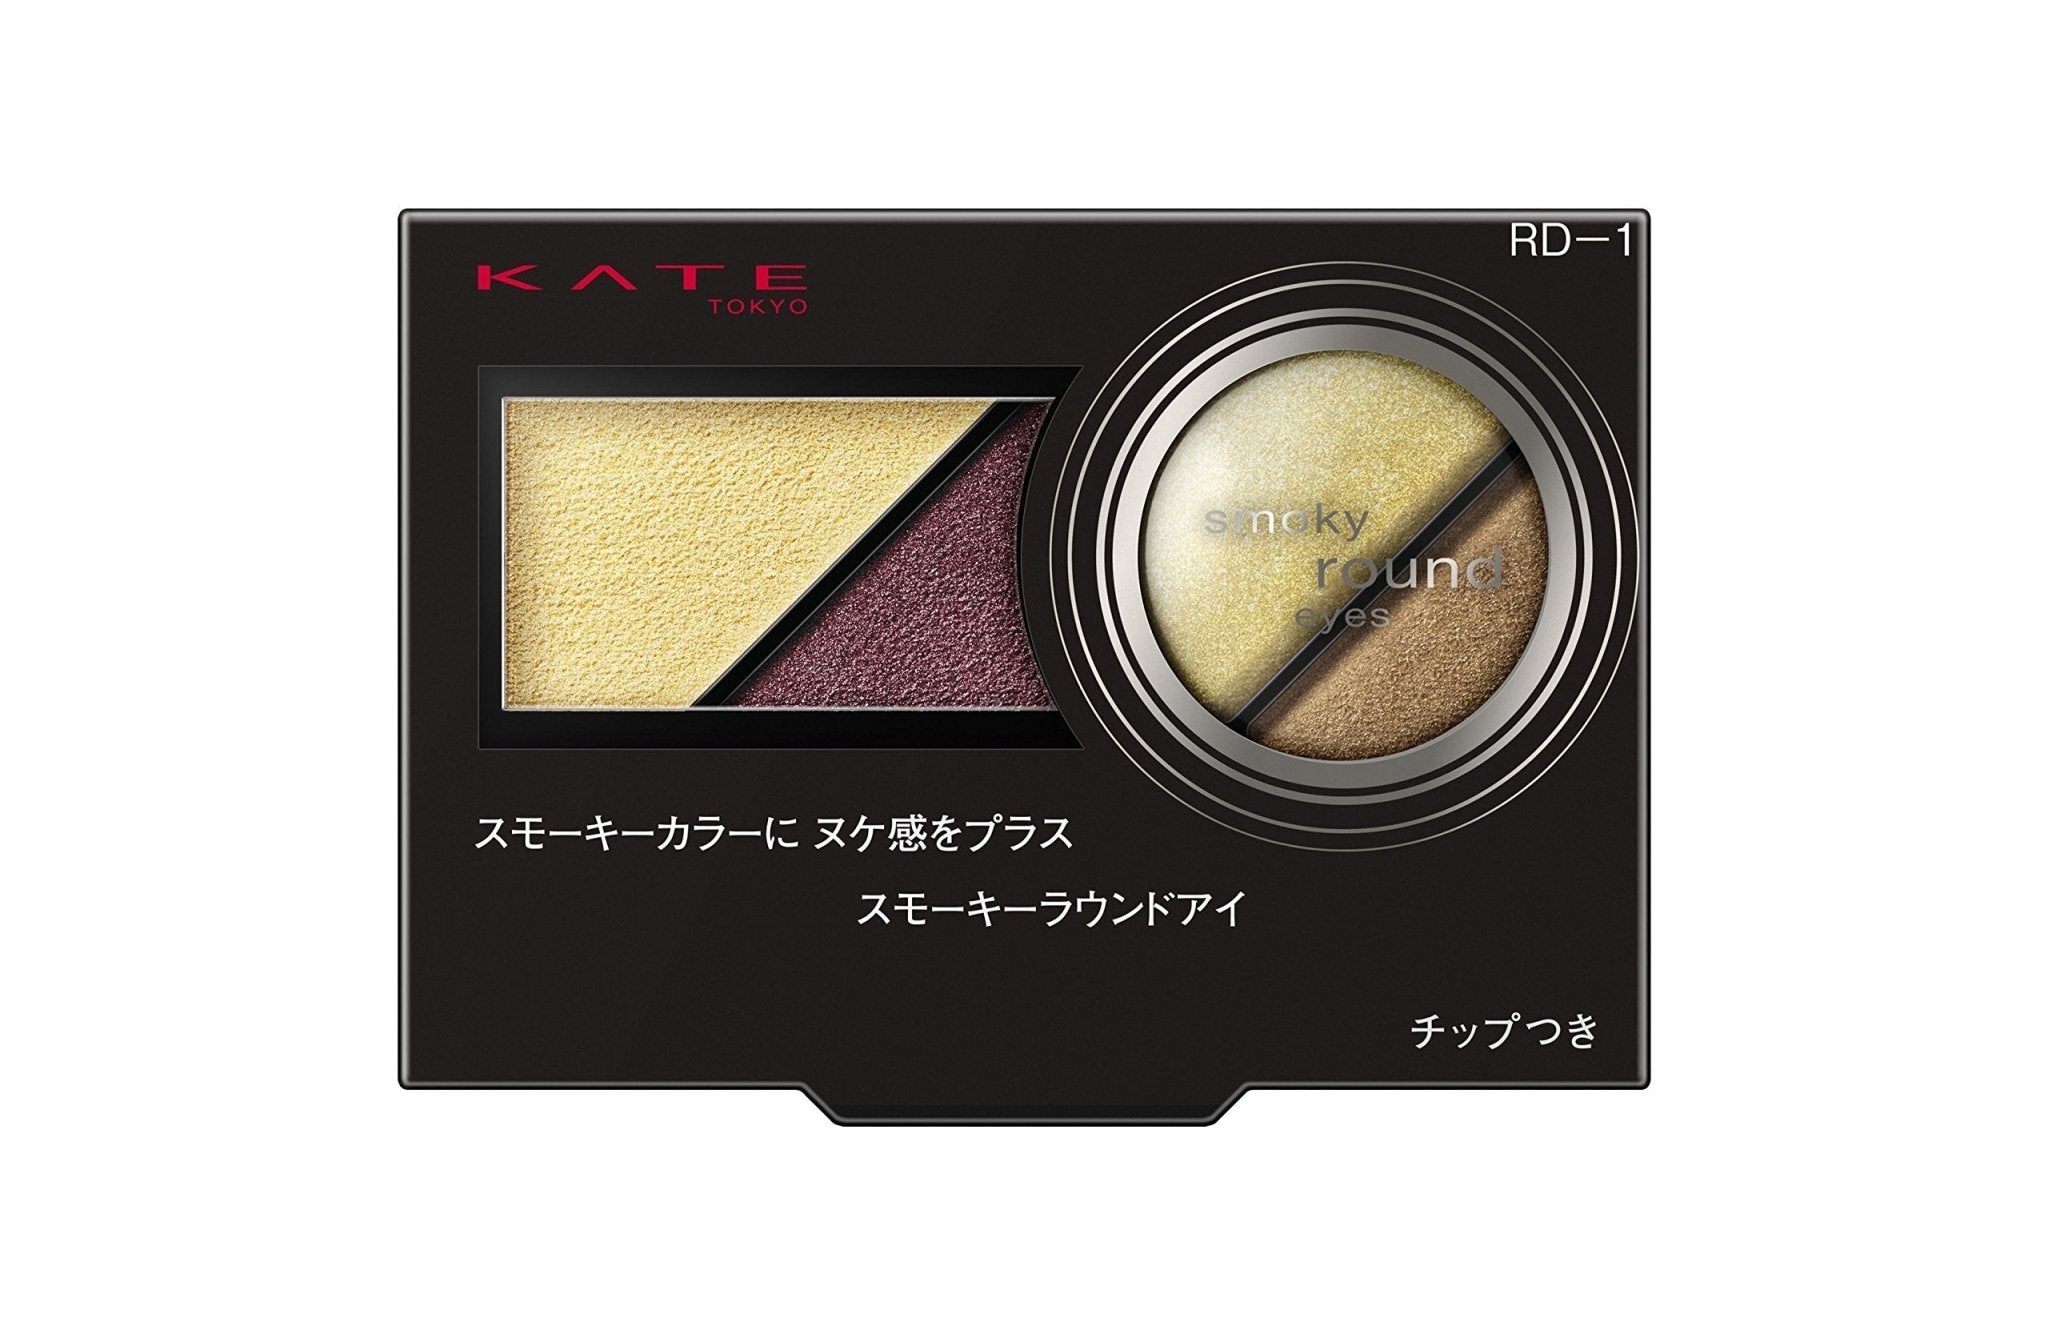 Kate RD - 1 Smoky Round Eyes Eyeshadow - Long Lasting Intense Color Impact